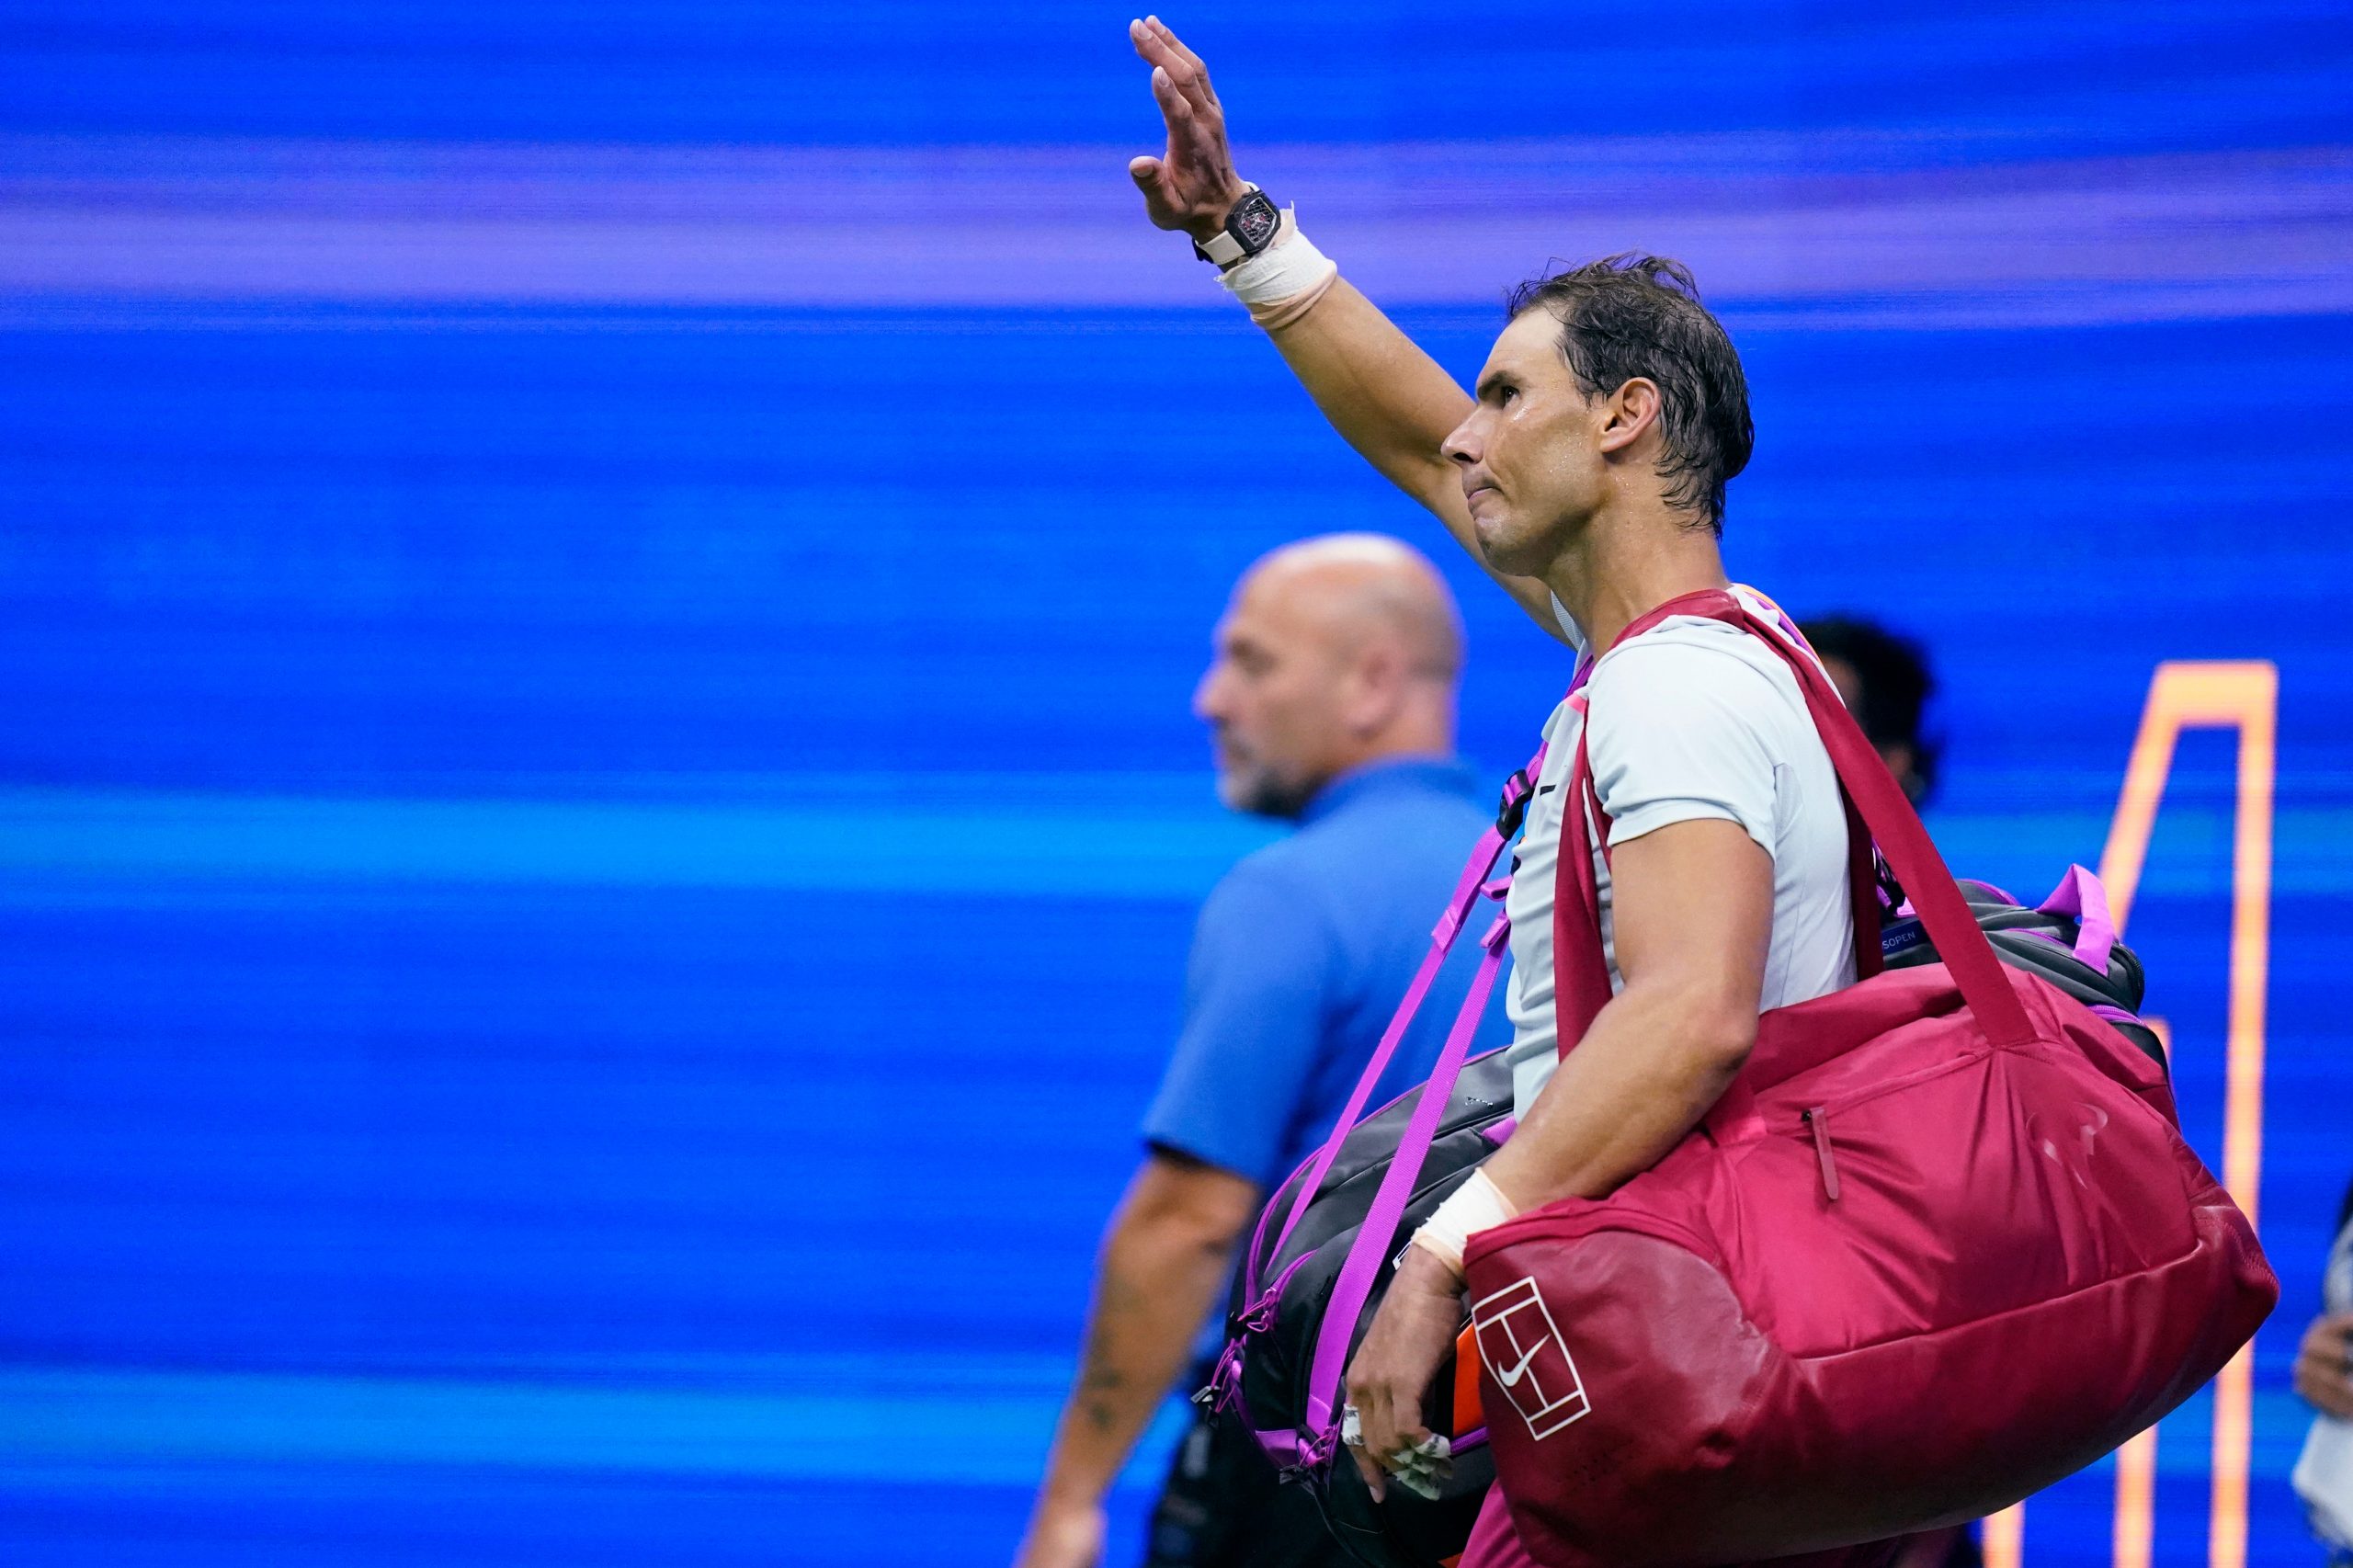 With Rafael Nadal, Daniil Medvedev’s exits, US Open 2022 wide open